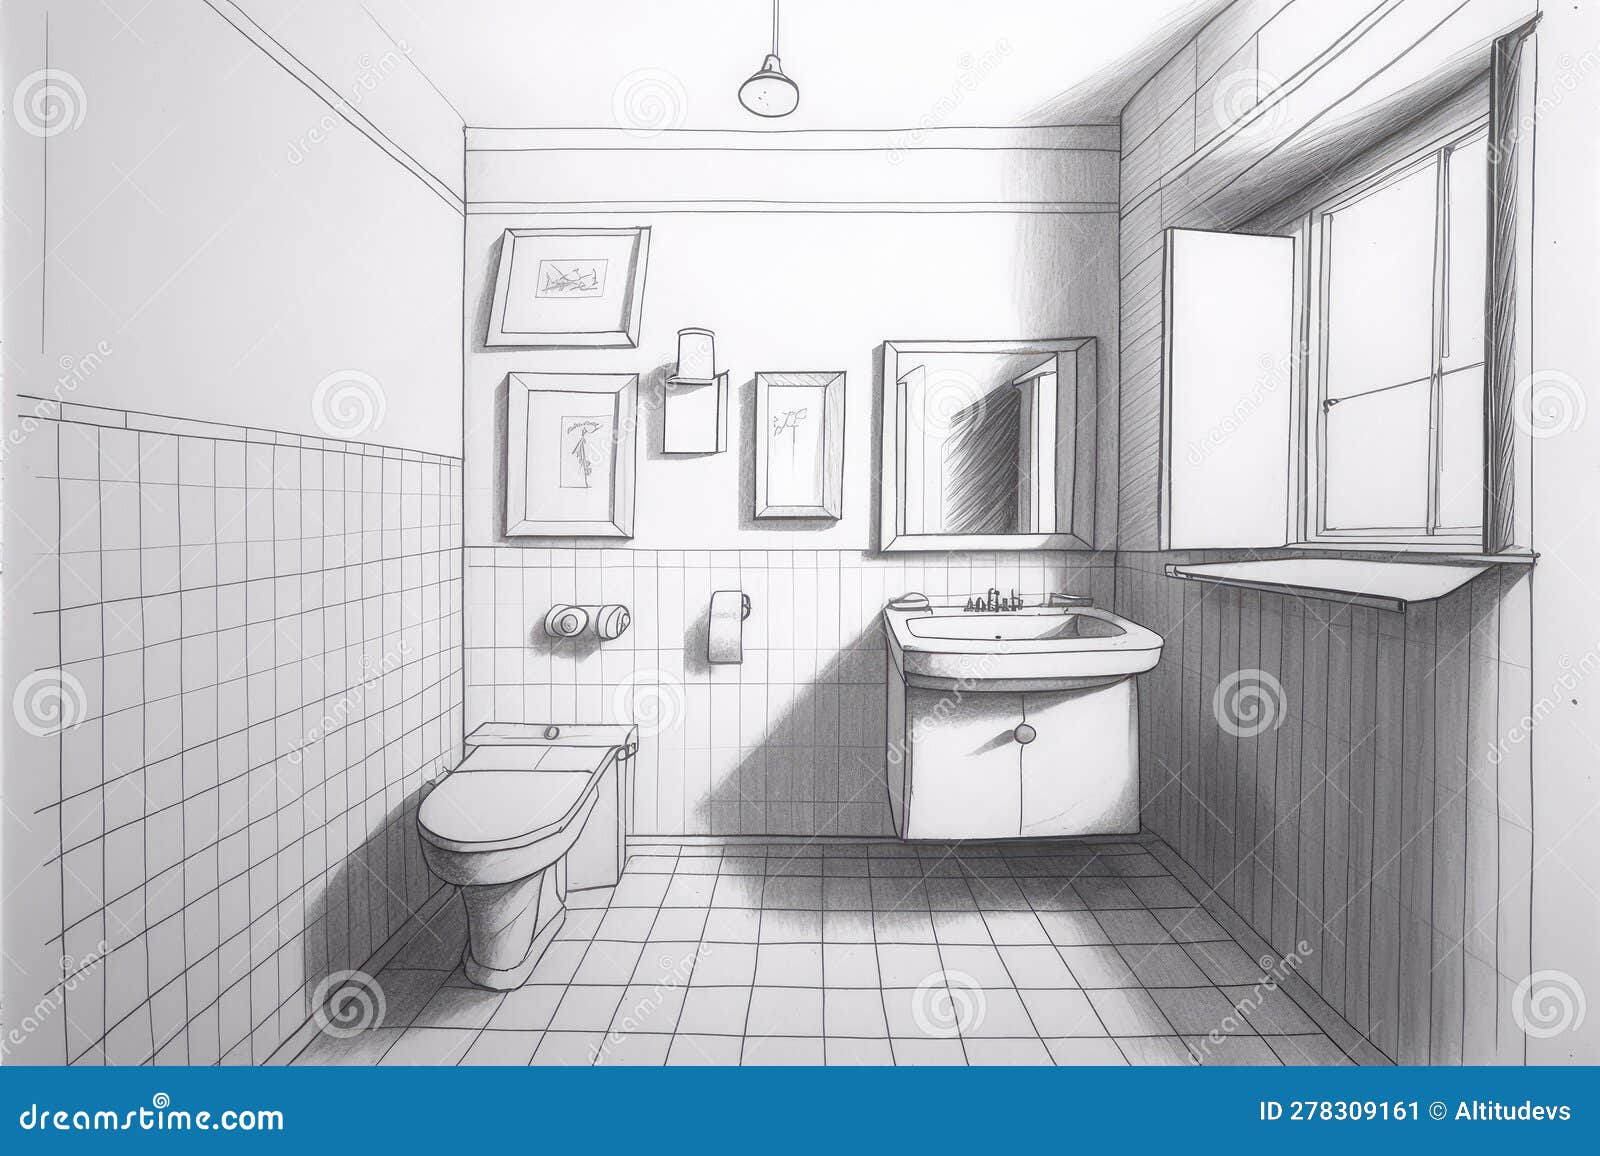 Hand Sketch - Bathroom Design Idea - NKBA